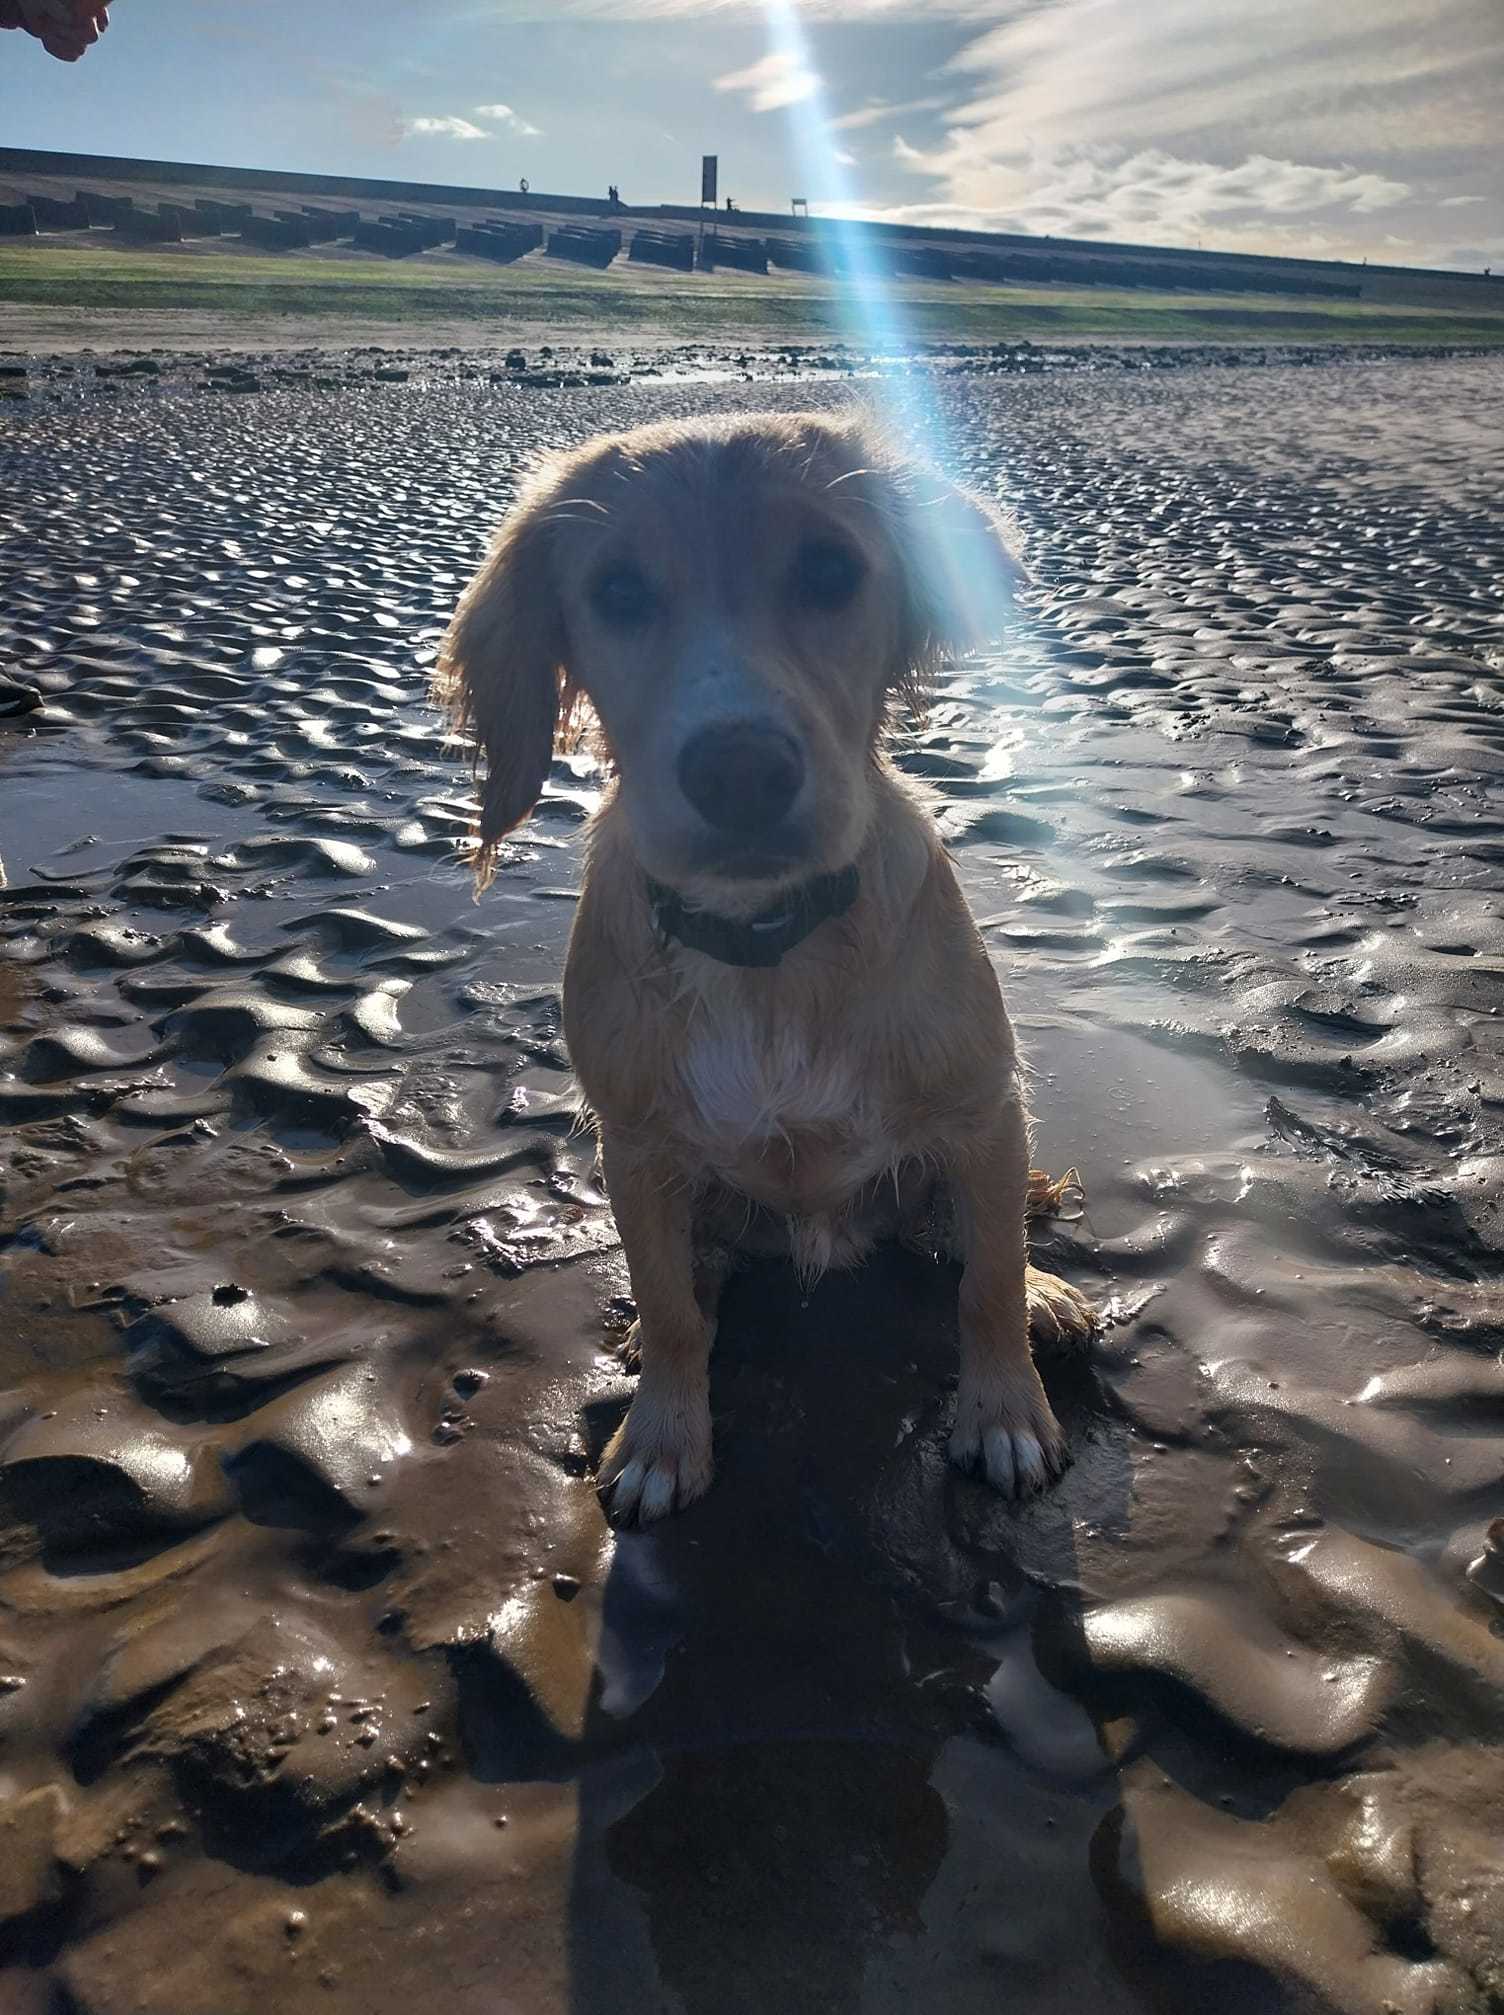 Milo at Moreton shore by Jessica Bayley